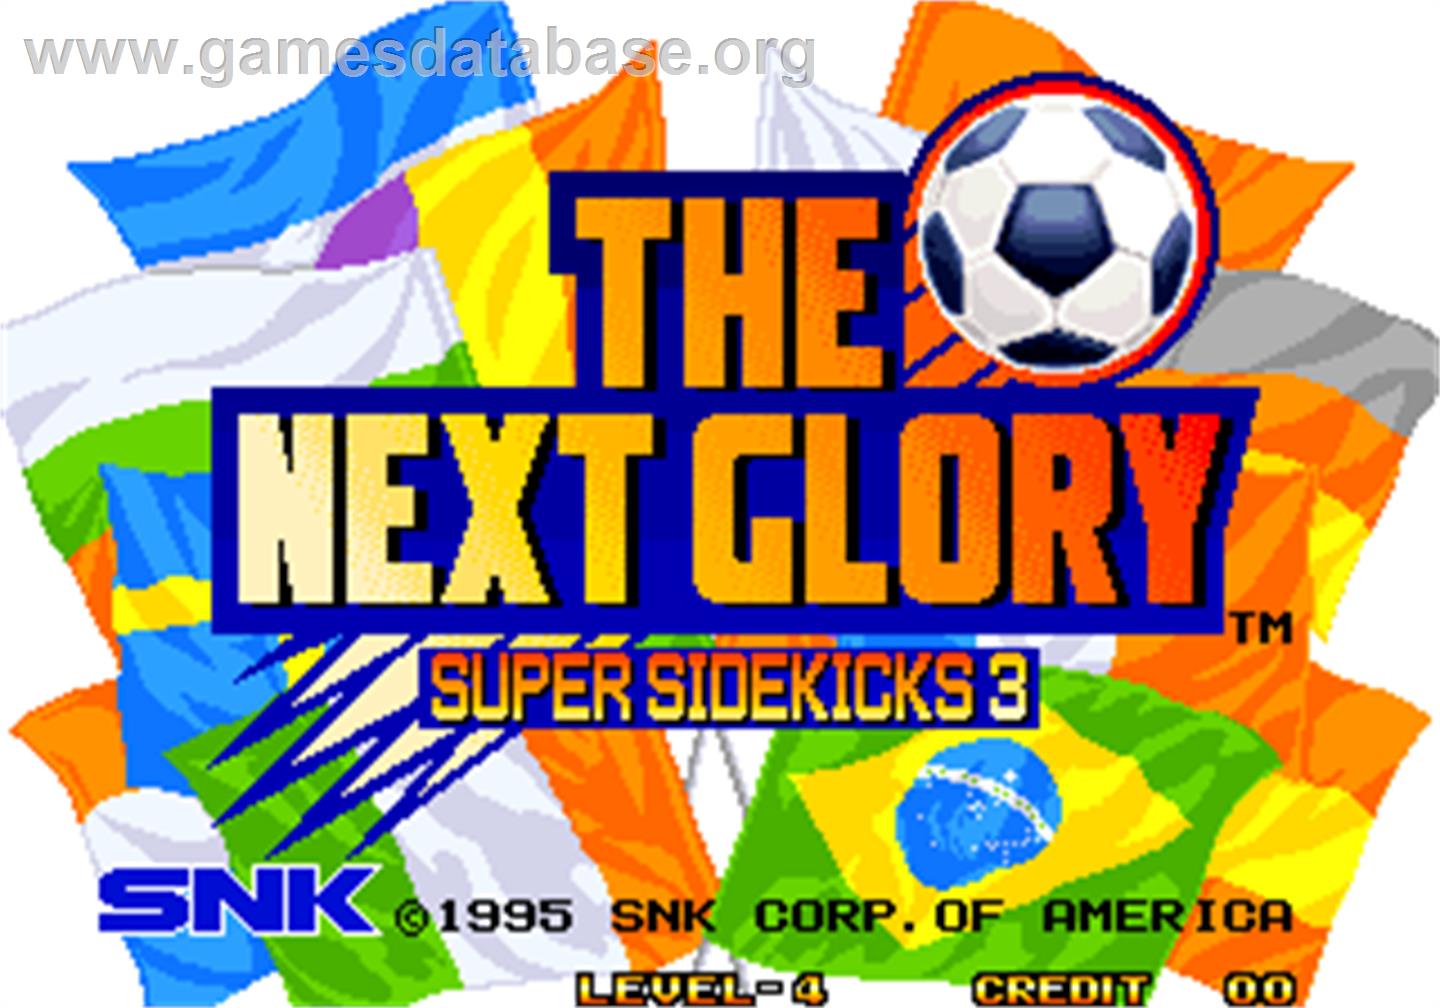 Super Sidekicks 3 - The Next Glory / Tokuten Ou 3 - eikoue no michi - Arcade - Artwork - Title Screen